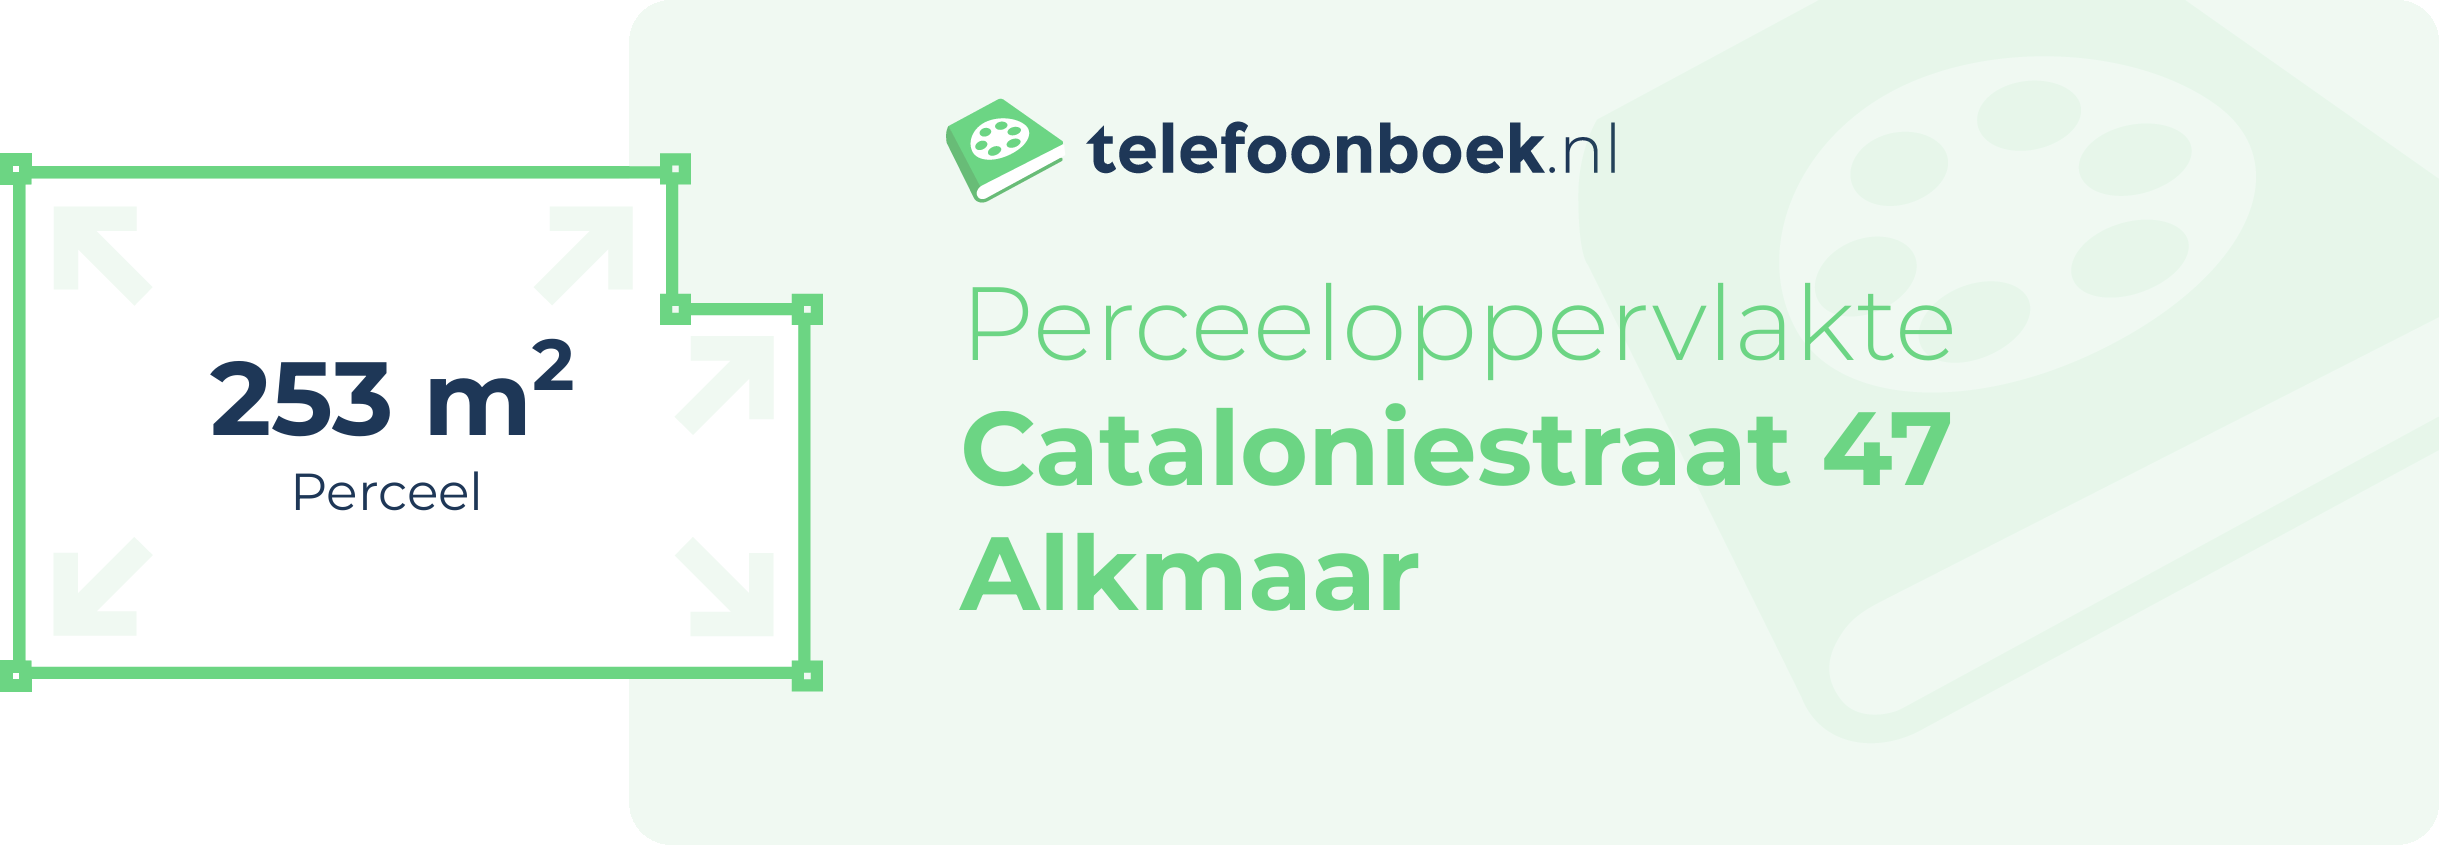 Perceeloppervlakte Cataloniestraat 47 Alkmaar